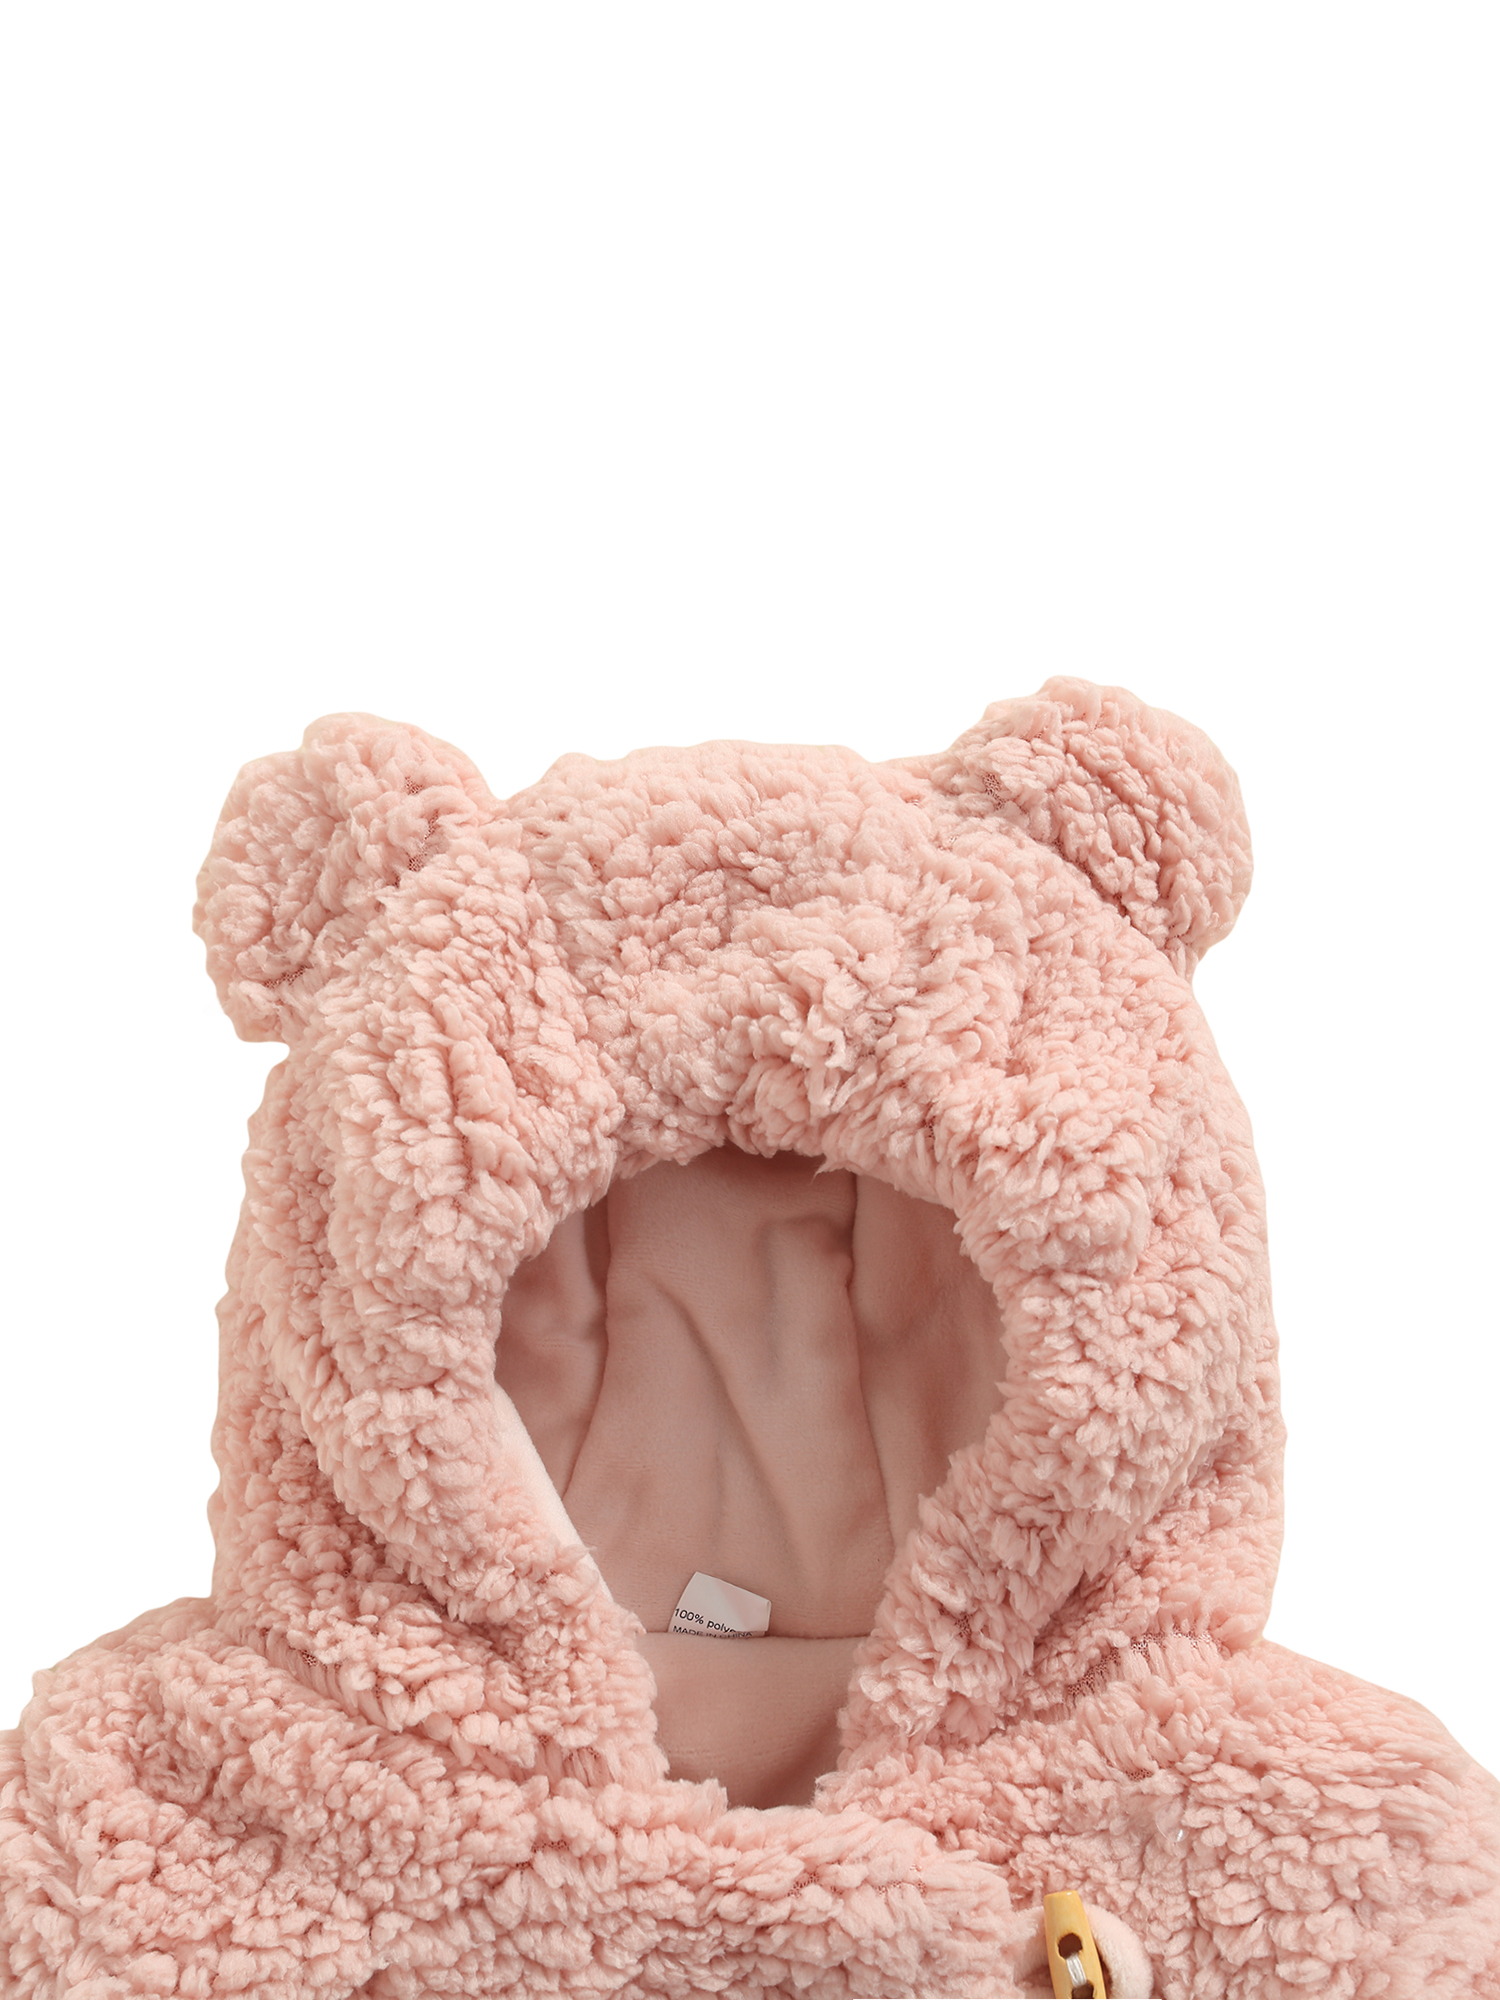 aturustex Baby Boys Girls Fleece Jacket Bear Ear Hoodie Warm Winter Outwear Top - image 4 of 7